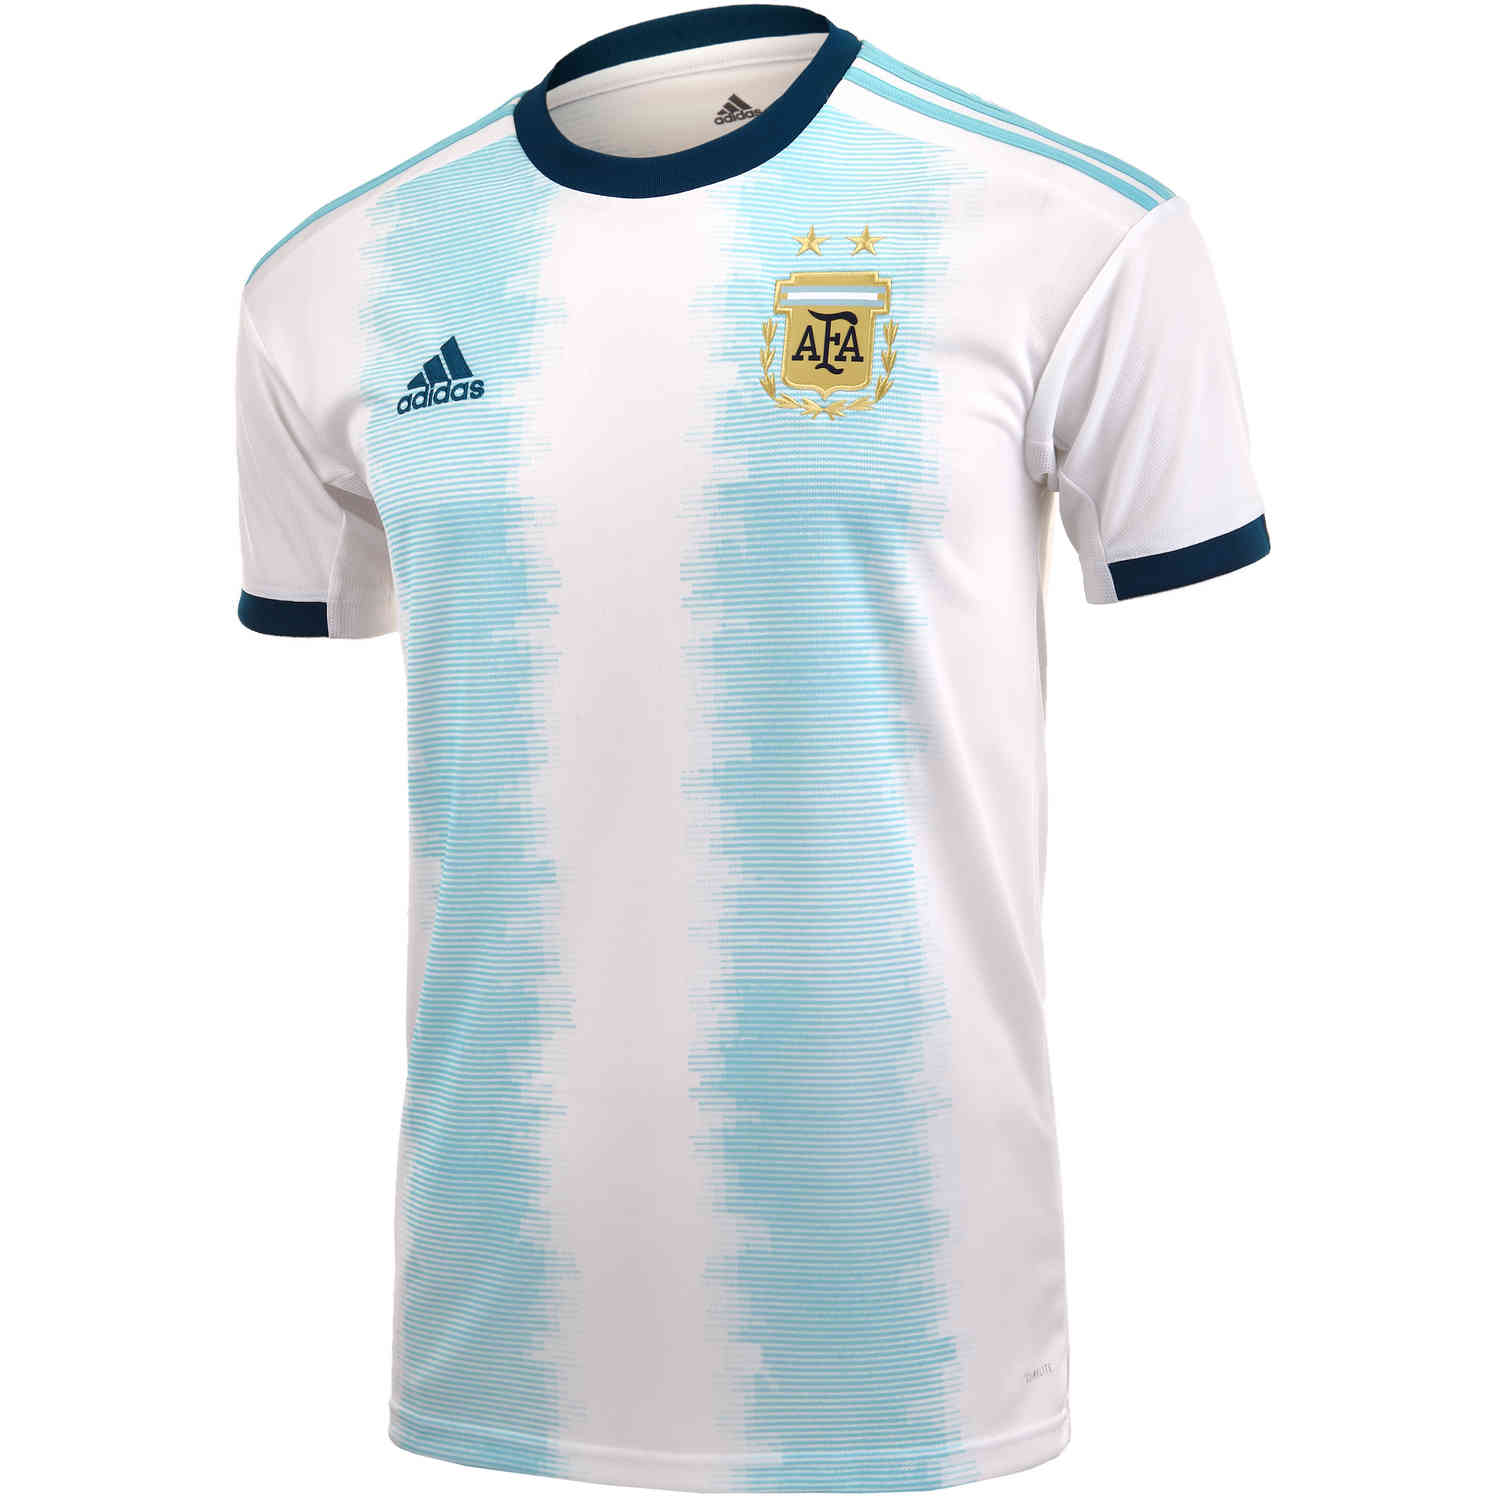 adidas Argentina Home Jersey - 2019 